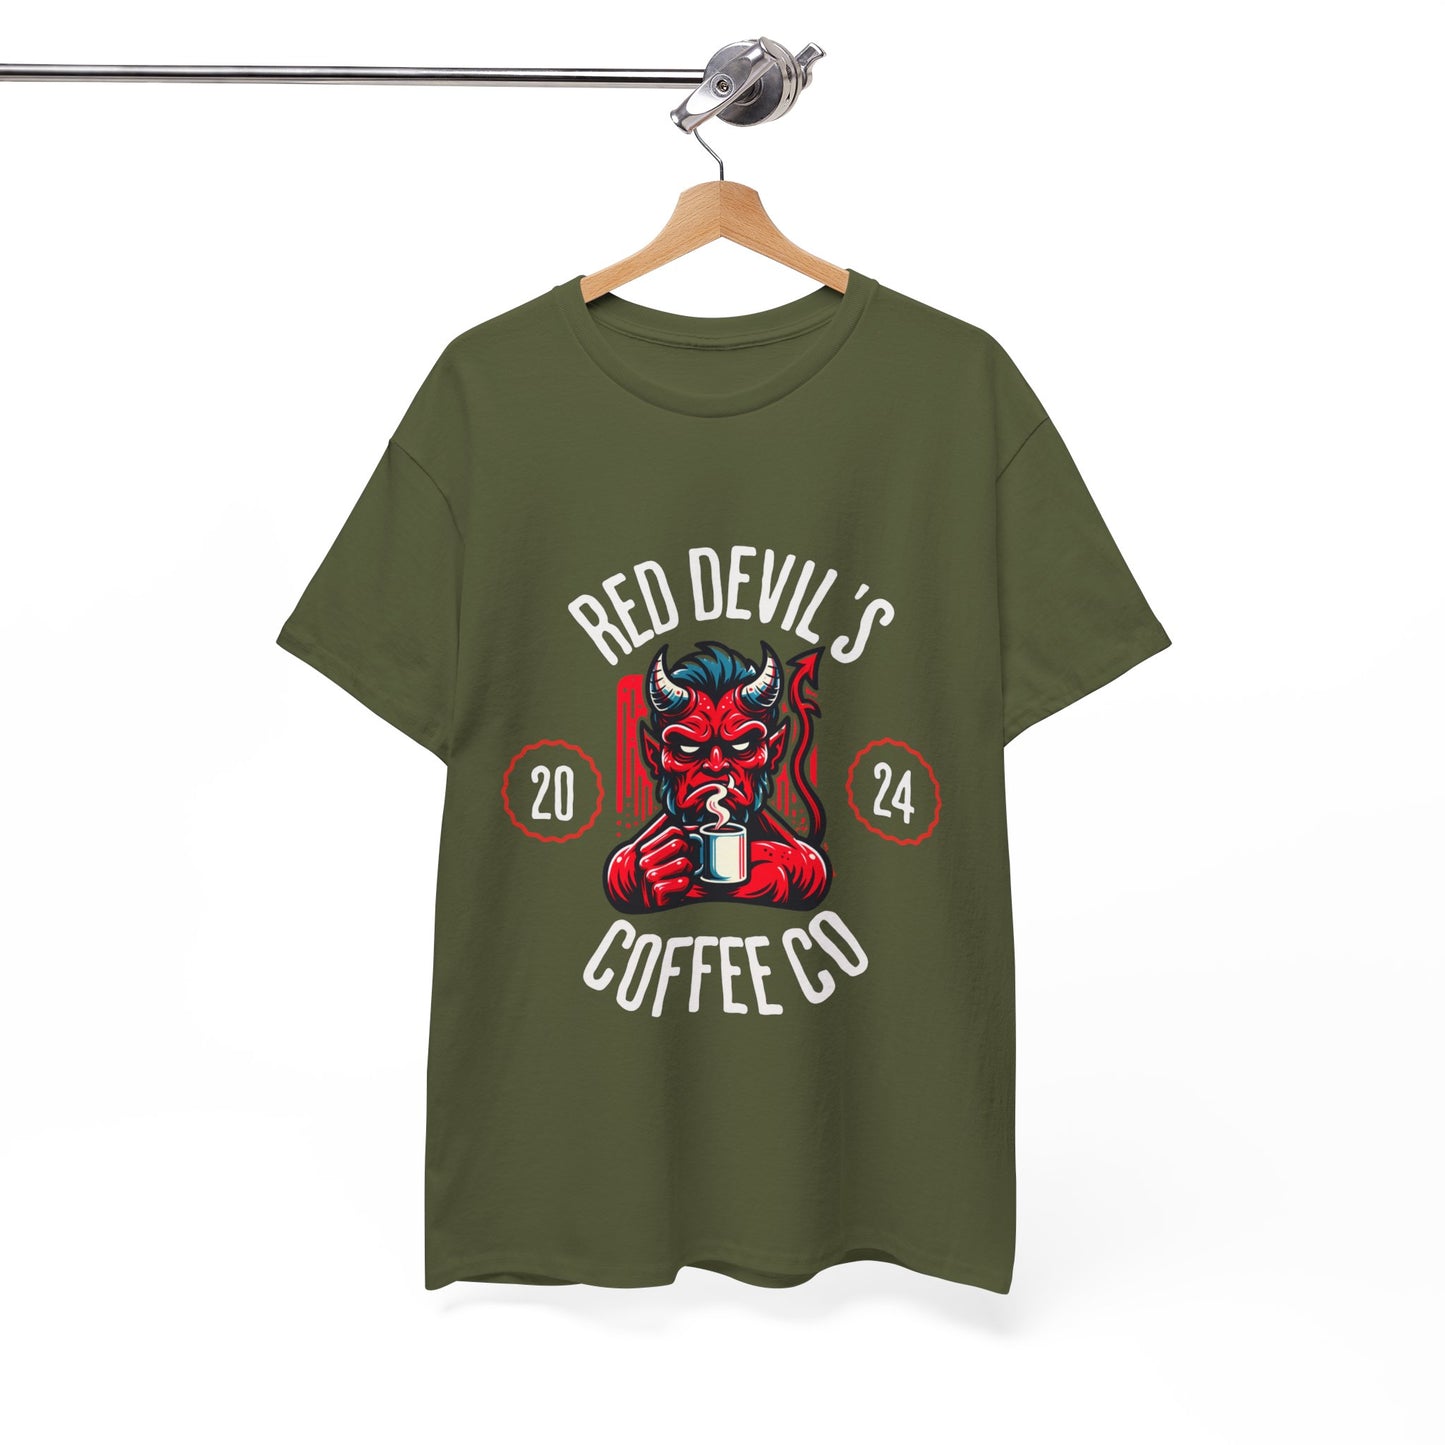 Red Devil Coffee TShirt Dad Gift Grumpy Morning Tee Cotton